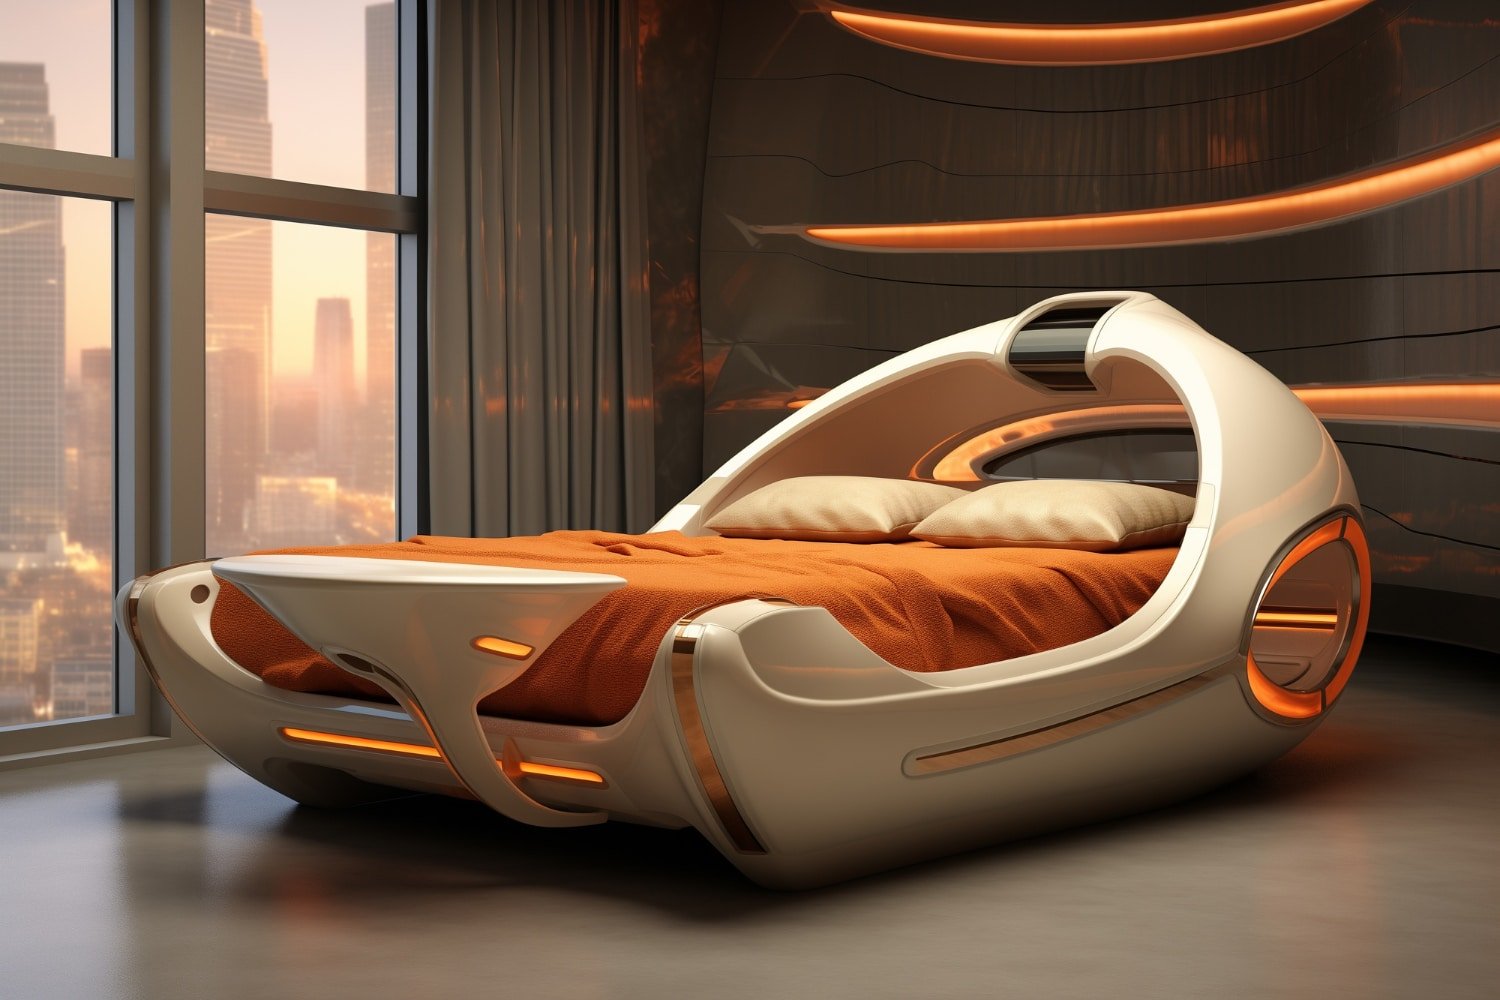 Kokoon Technology LTD: The Future of Sleep and Relaxation Technology